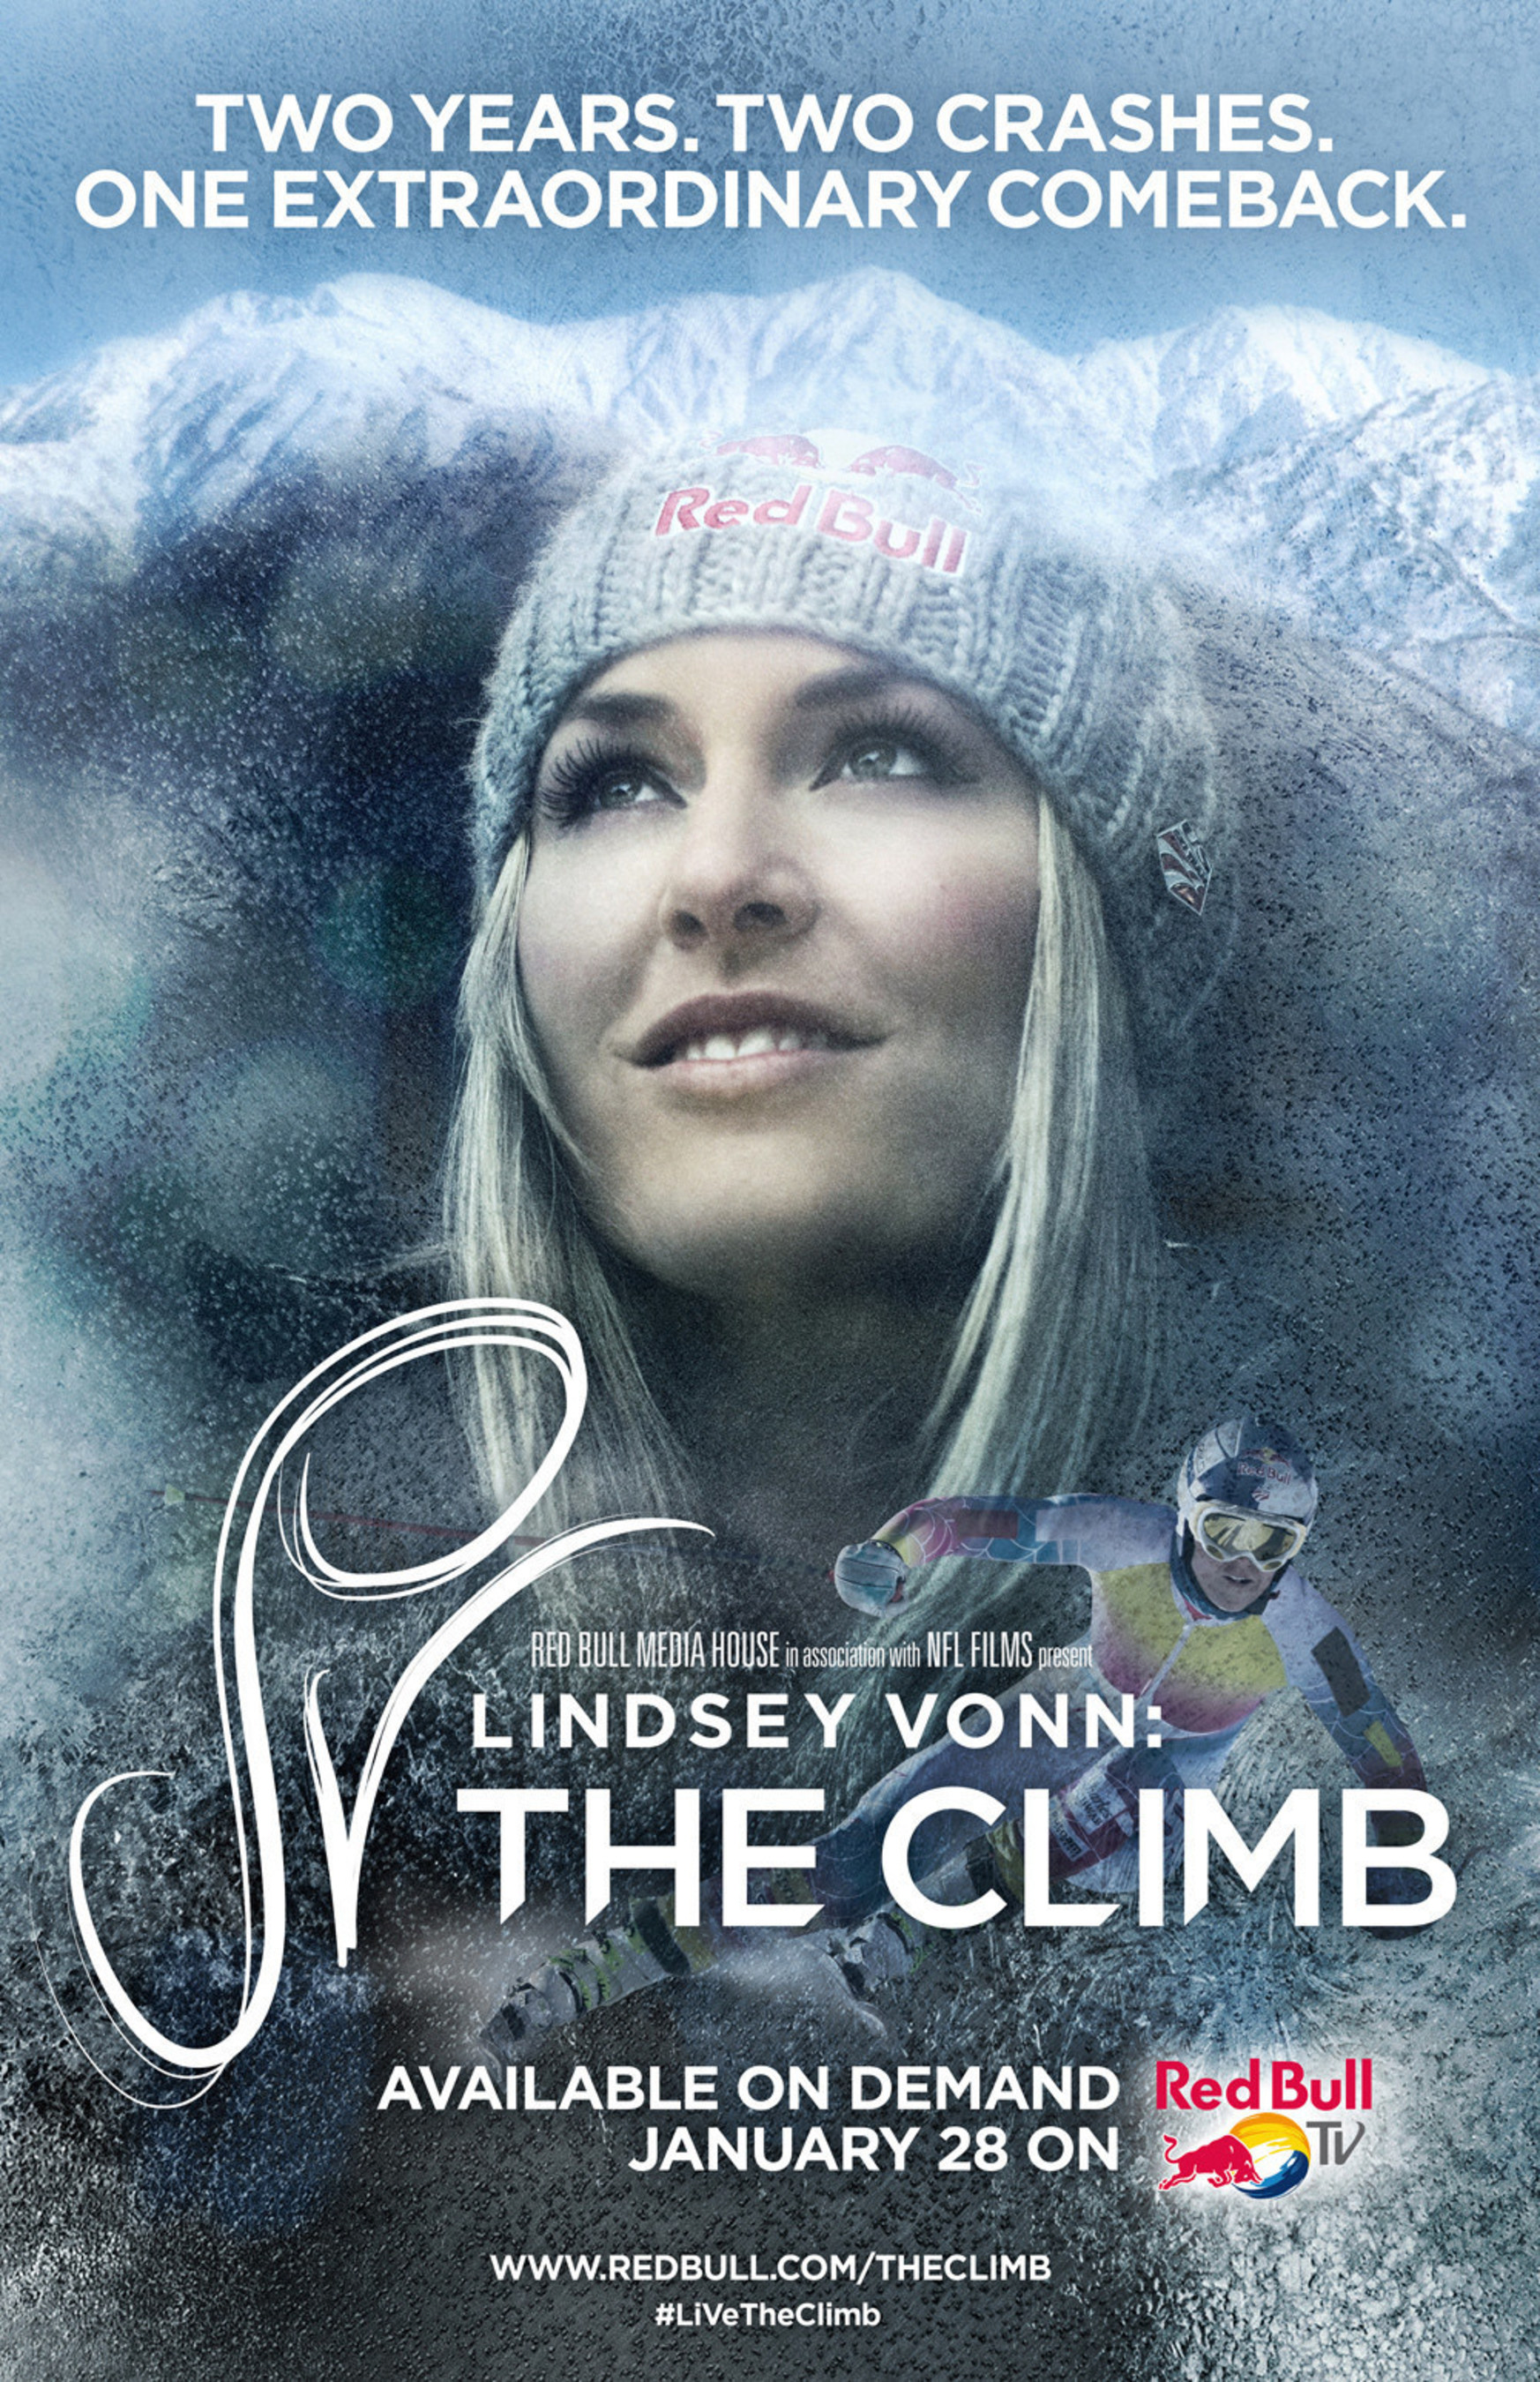 Lindsey Vonn: The Climb debuts on Red Bull TV January 28